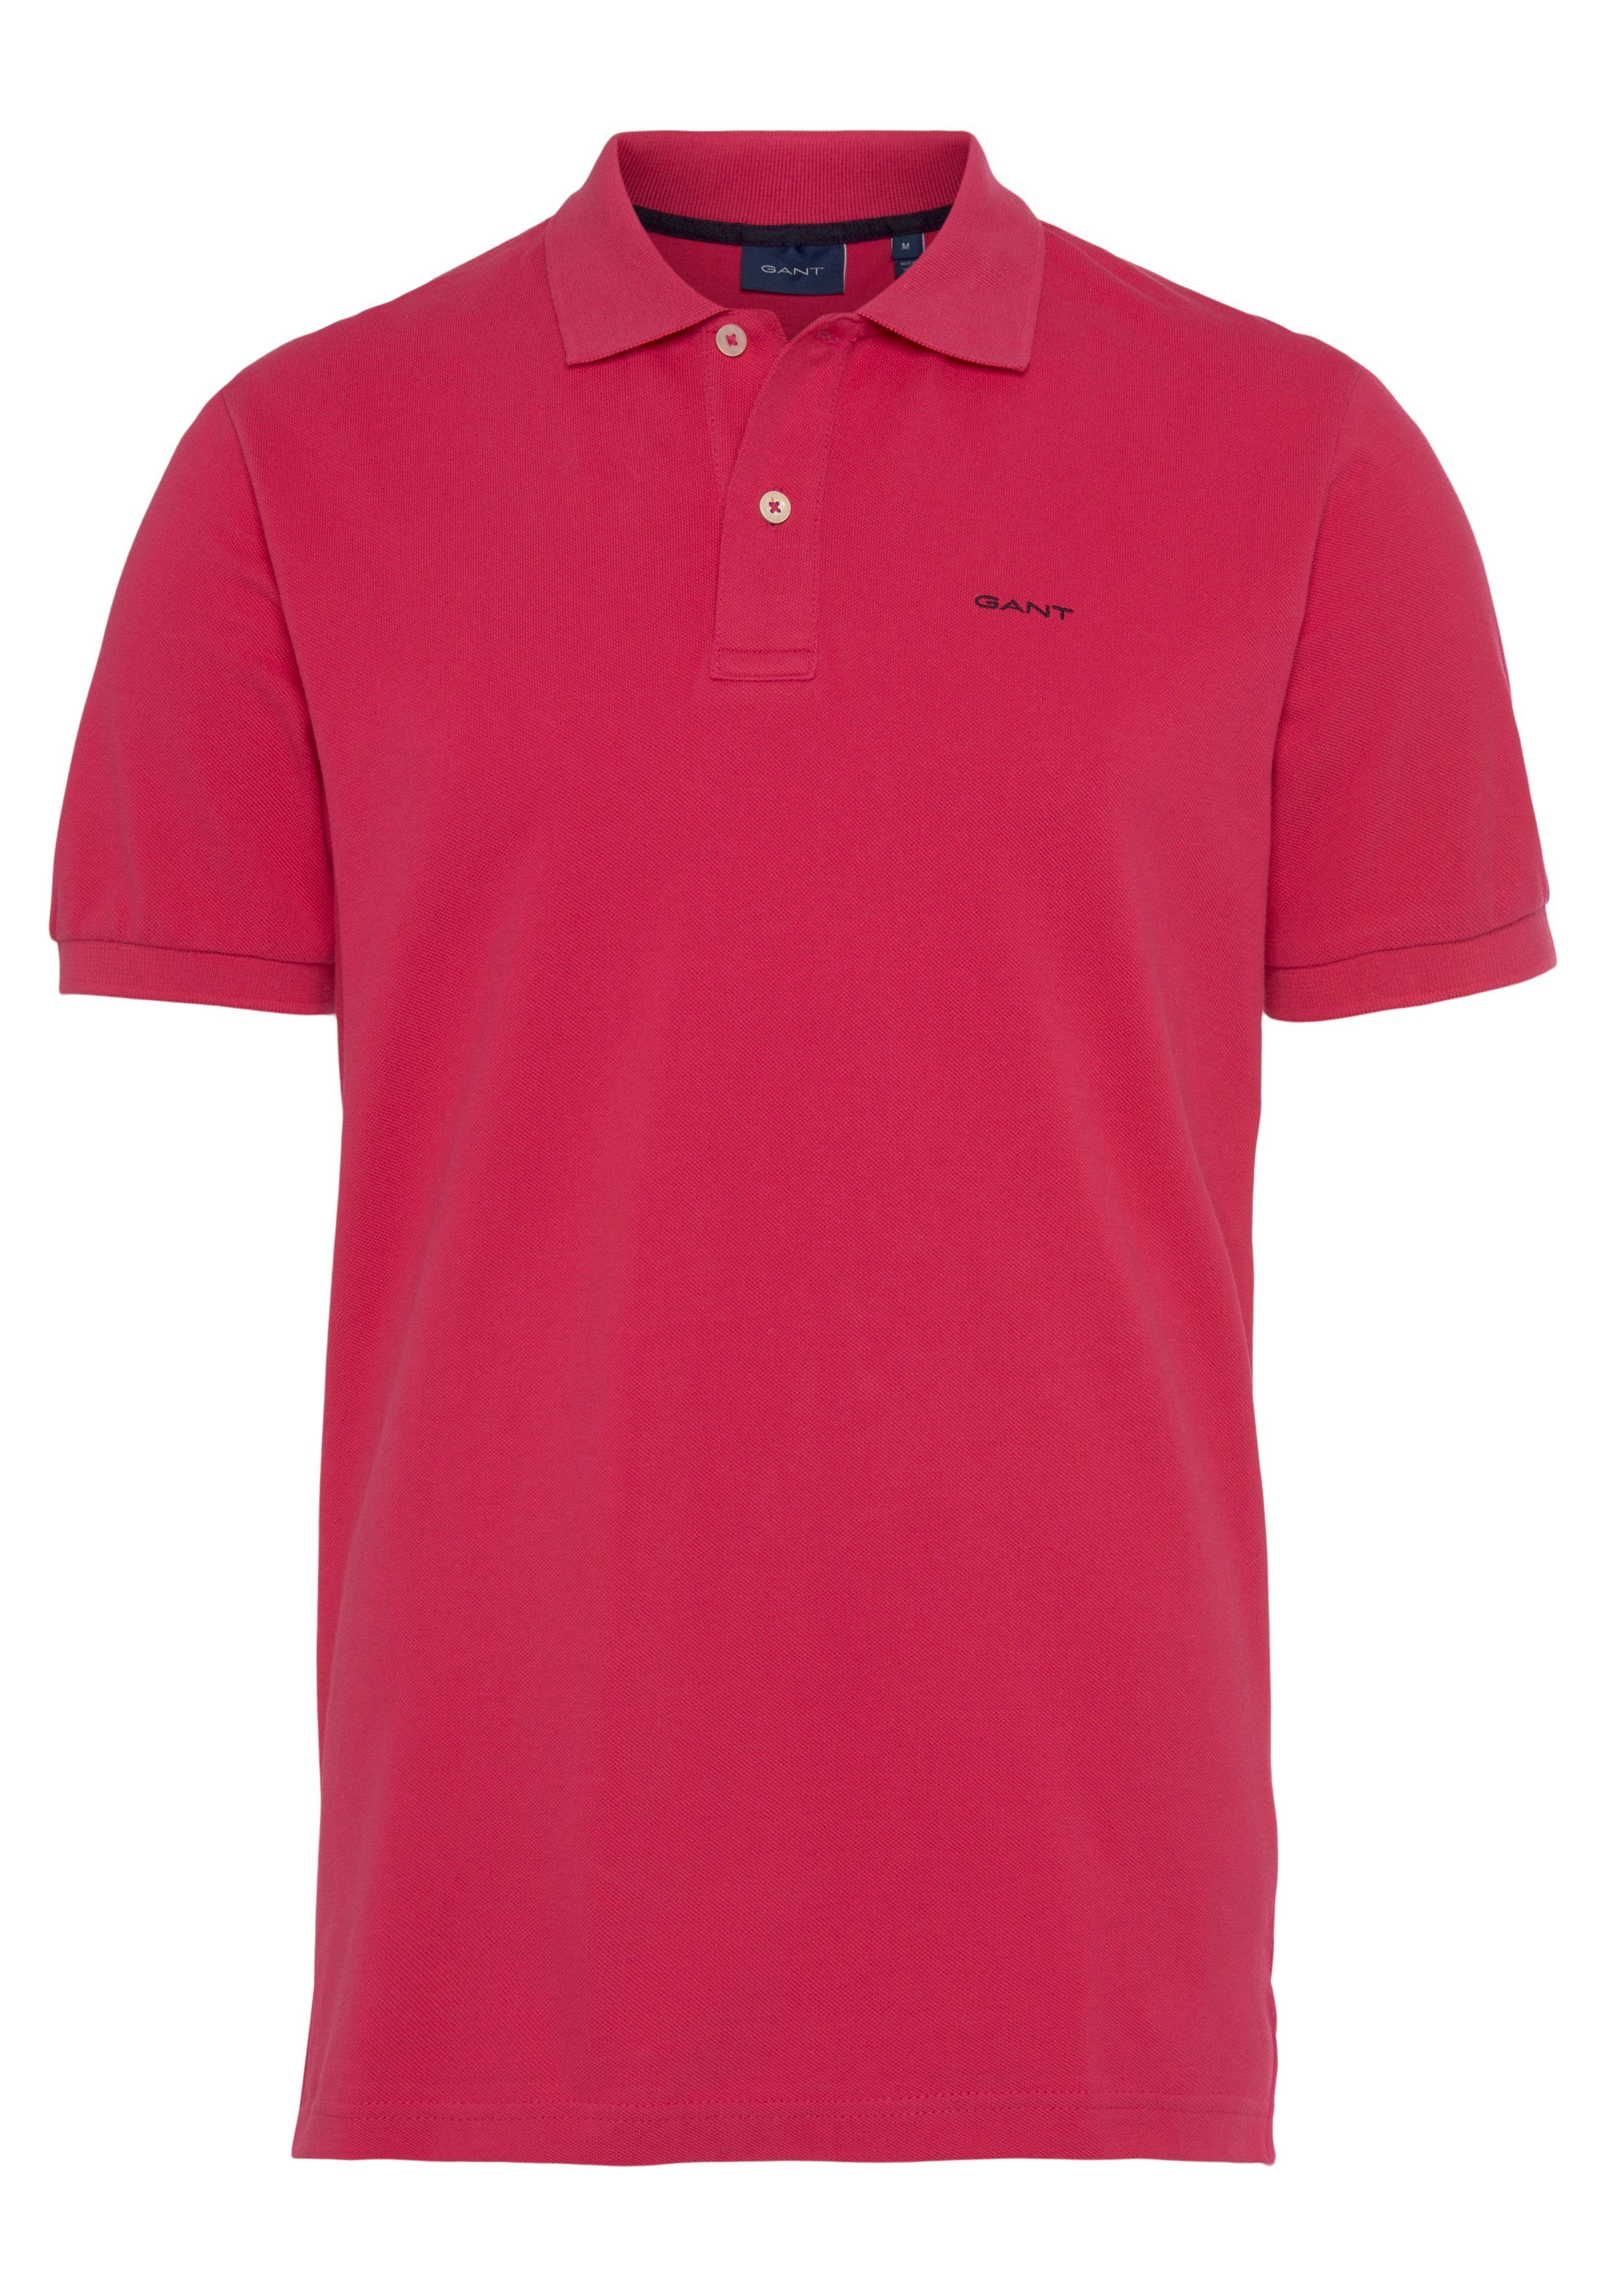 Regular Qualität PIQUE Smart Poloshirt MD. Gant KA Casual, Premium mag.pink RUGGER Fit, Piqué-Polo Shirt,